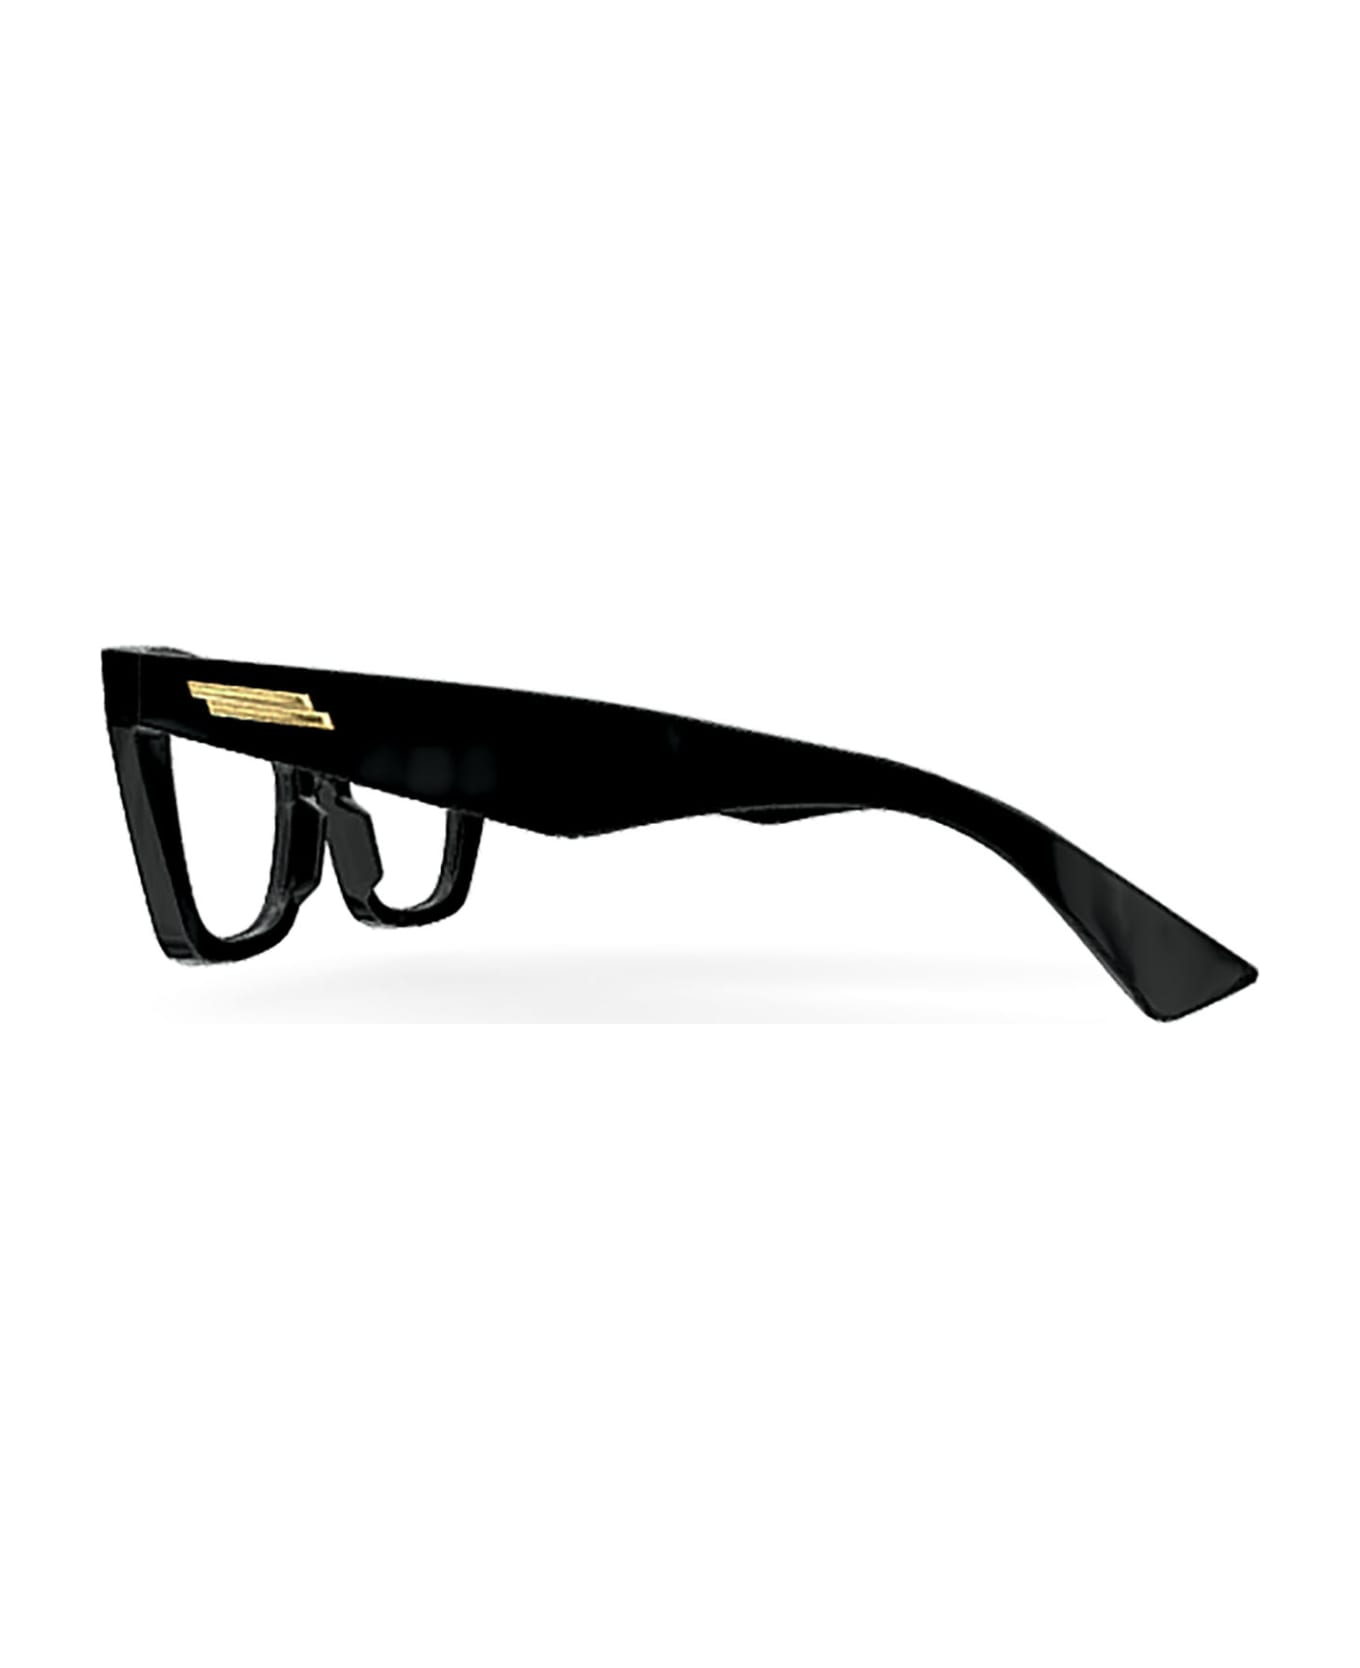 Bottega Veneta Eyewear 1g0g4n70a Glasses - 001 black black transpare